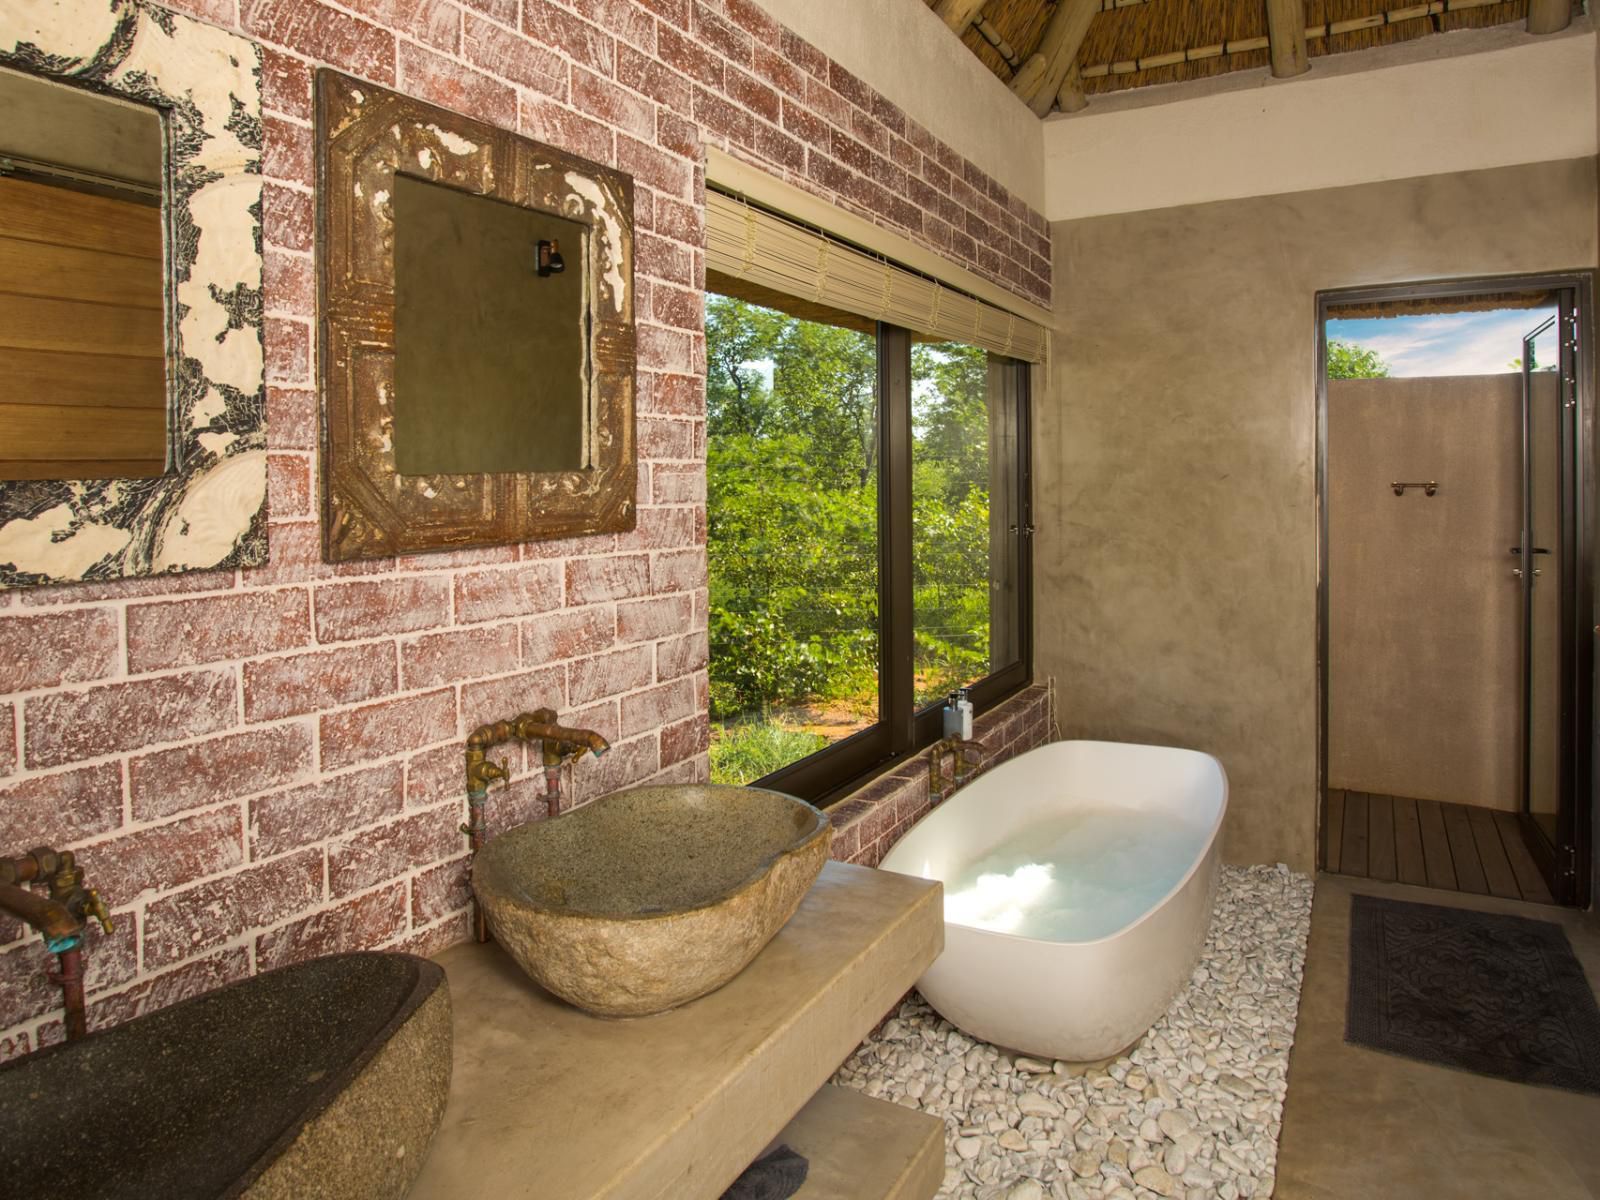 Mafunyane Lodge Klaserie Private Nature Reserve Mpumalanga South Africa Sepia Tones, Bathroom